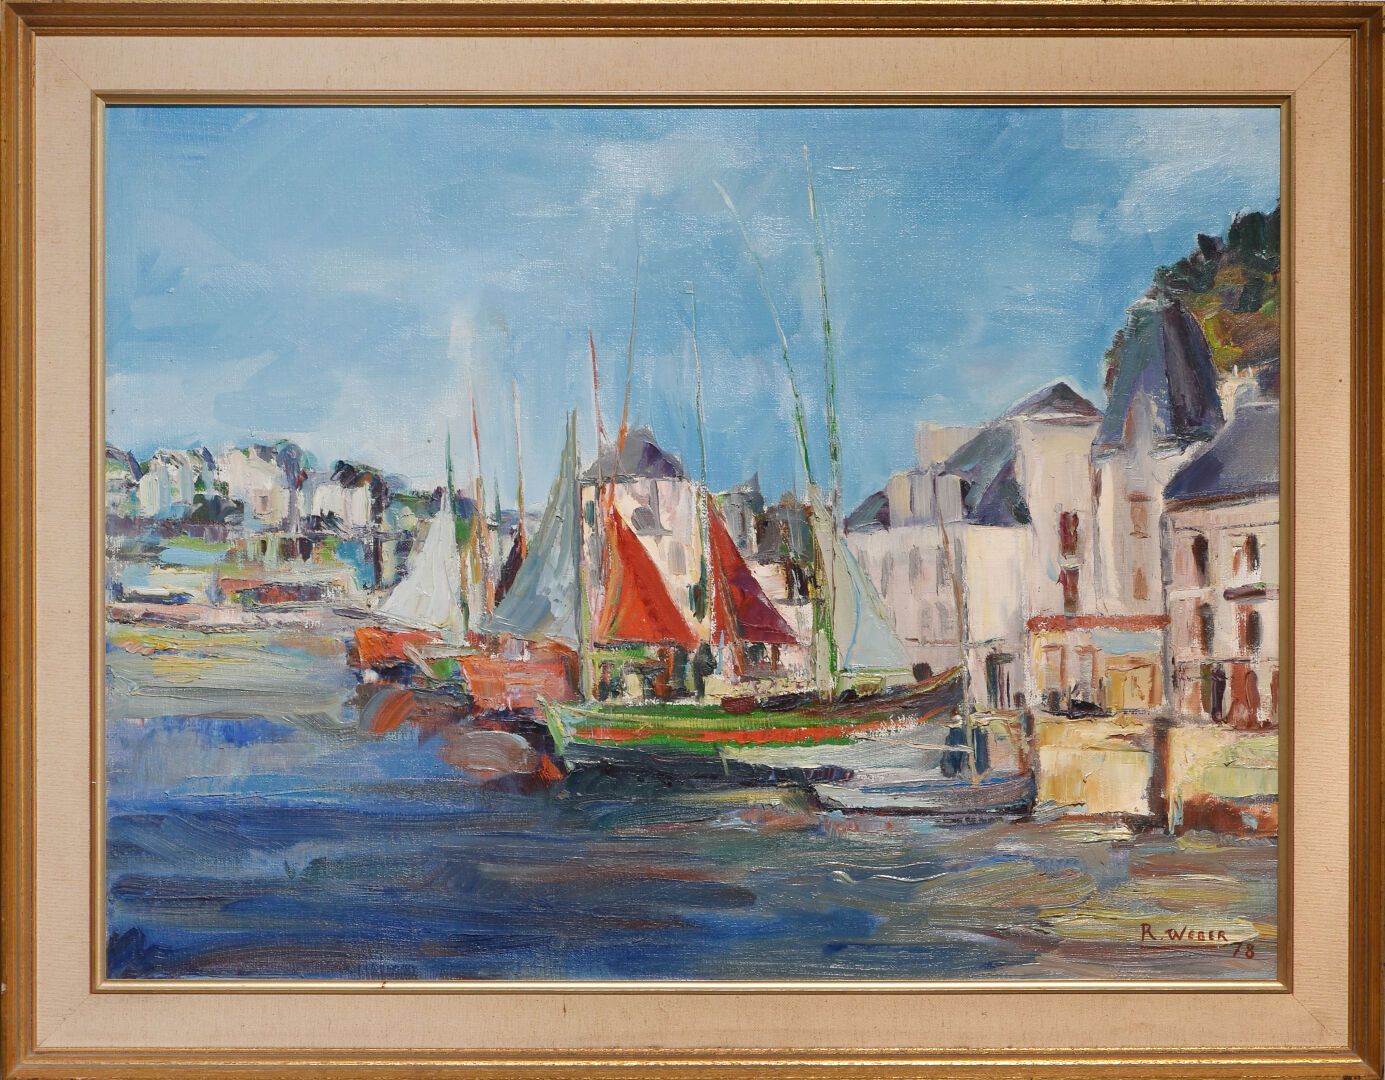 René WEBER (XXeme) 布列塔尼港。
右下角有签名的布面油画，日期为78年
尺寸：60 x 80厘米